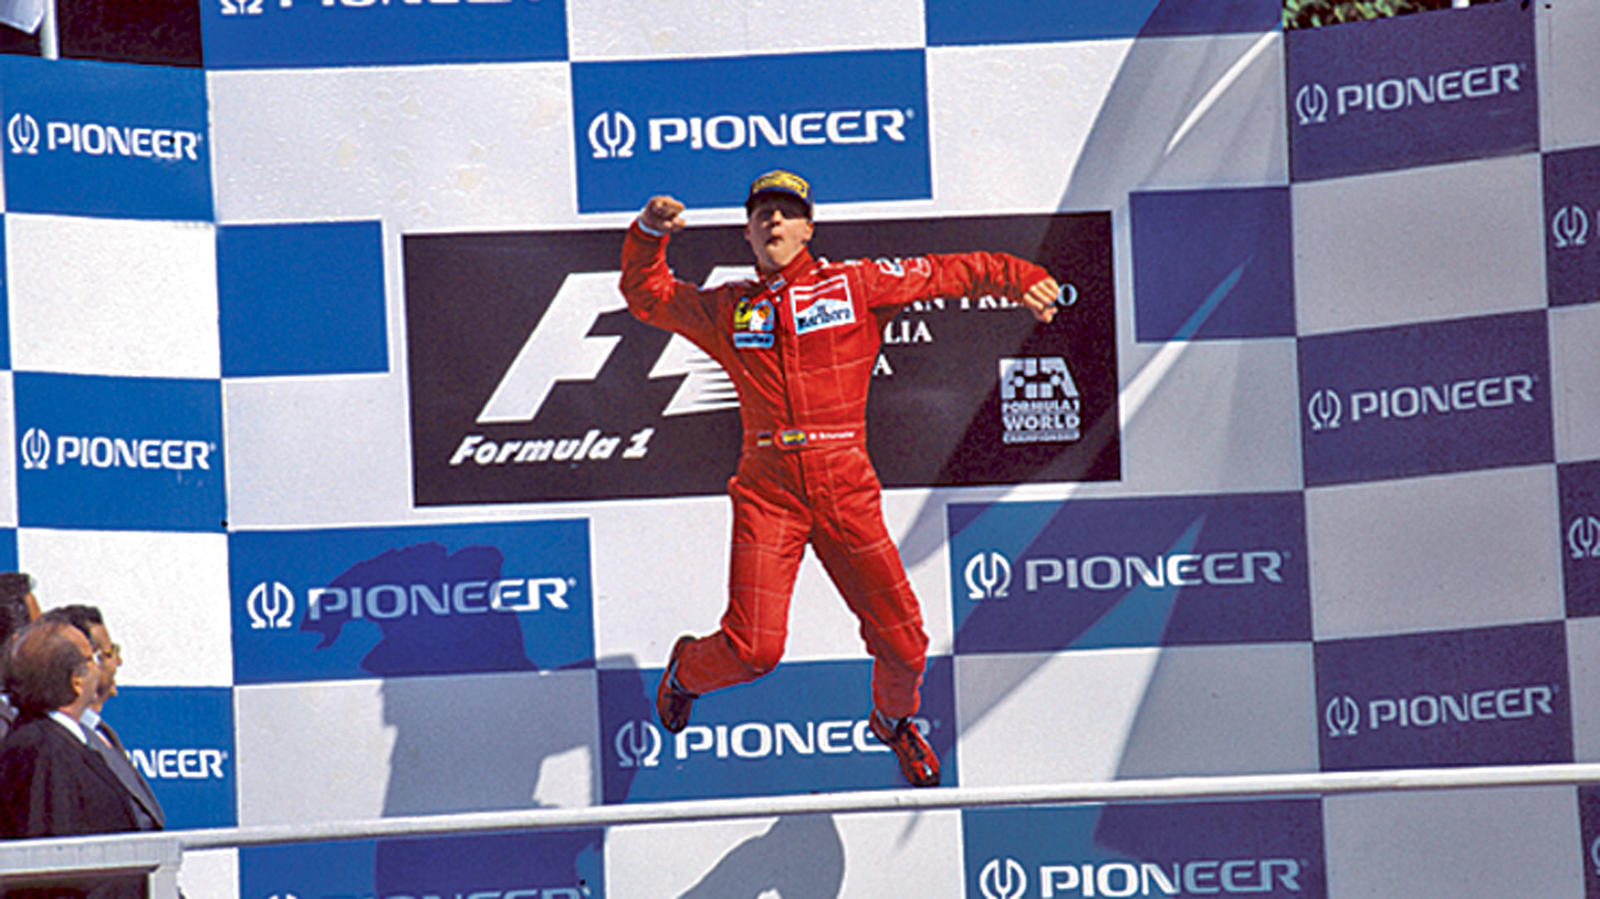 Michael Schumacher (1)